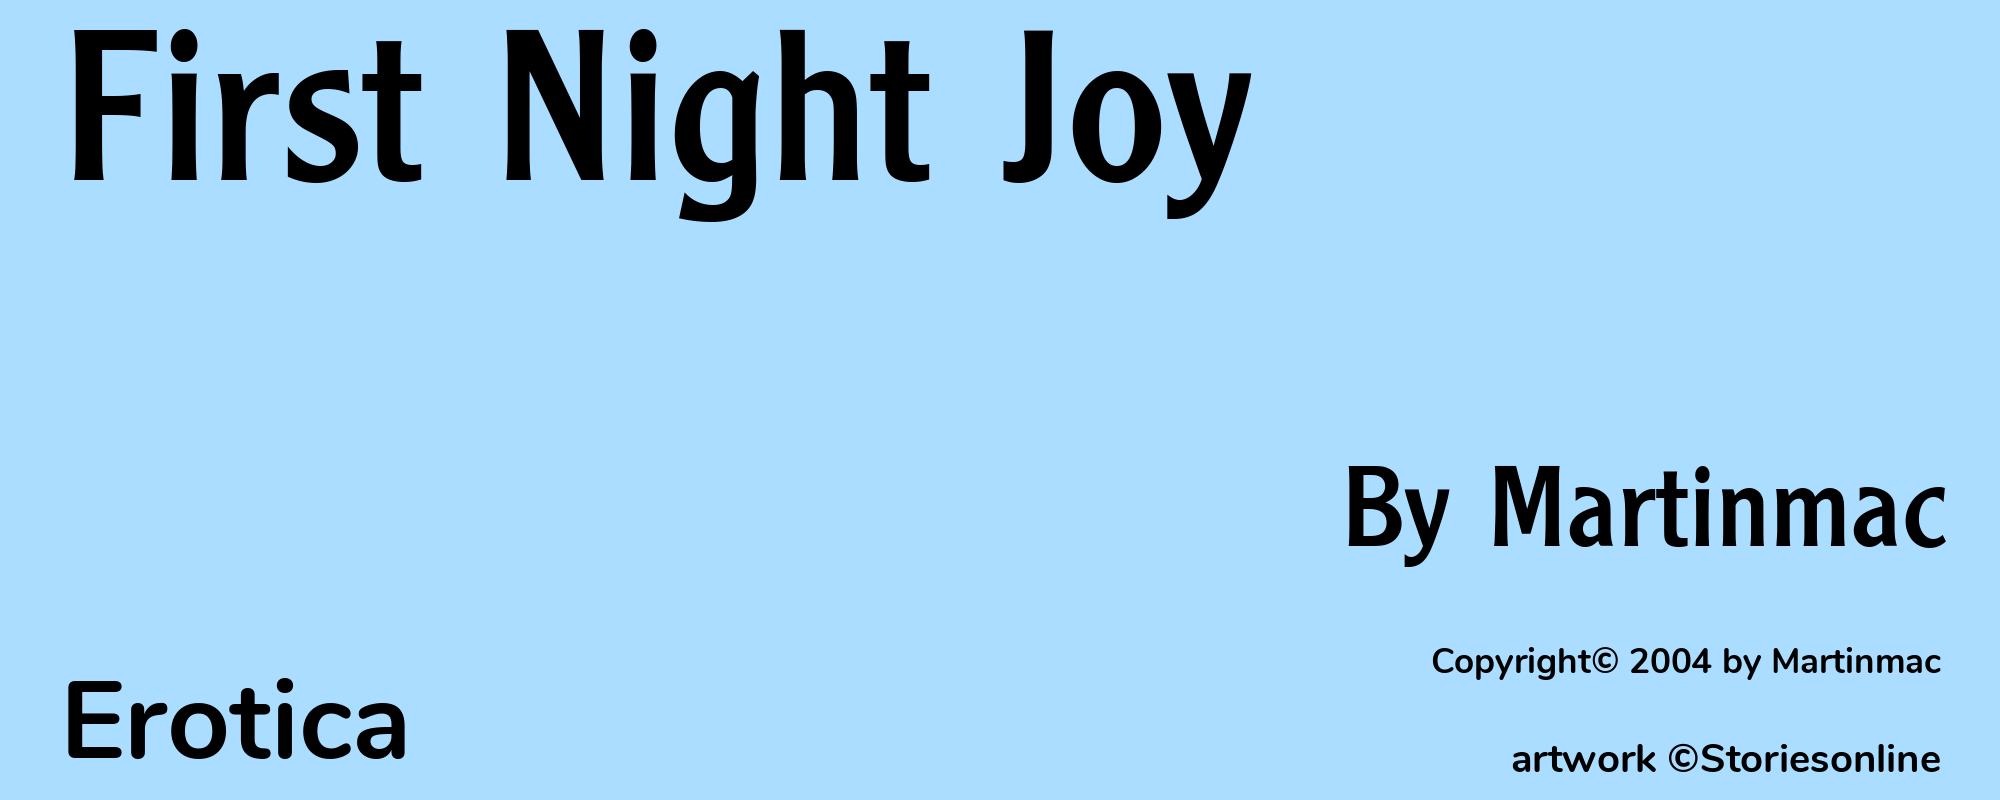 First Night Joy - Cover